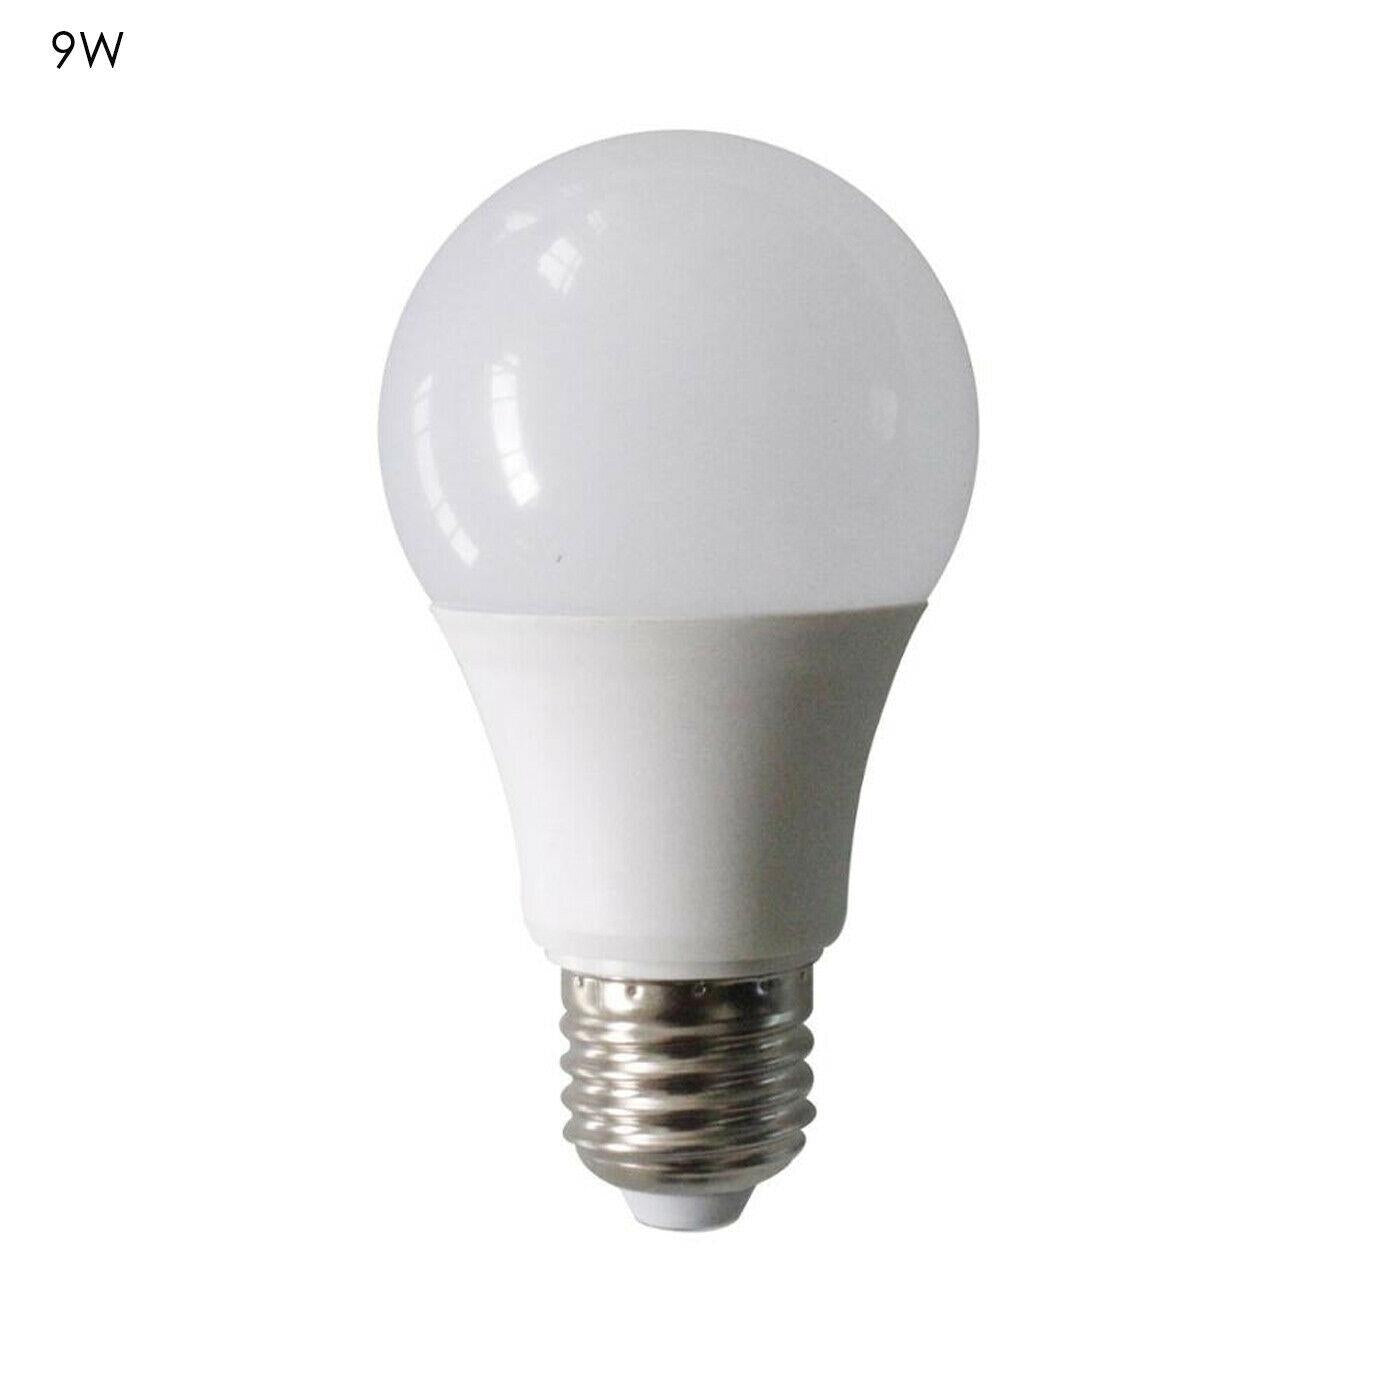 W-25W B22 E27 GLS Light Bulbs Cool White A+ Lighting